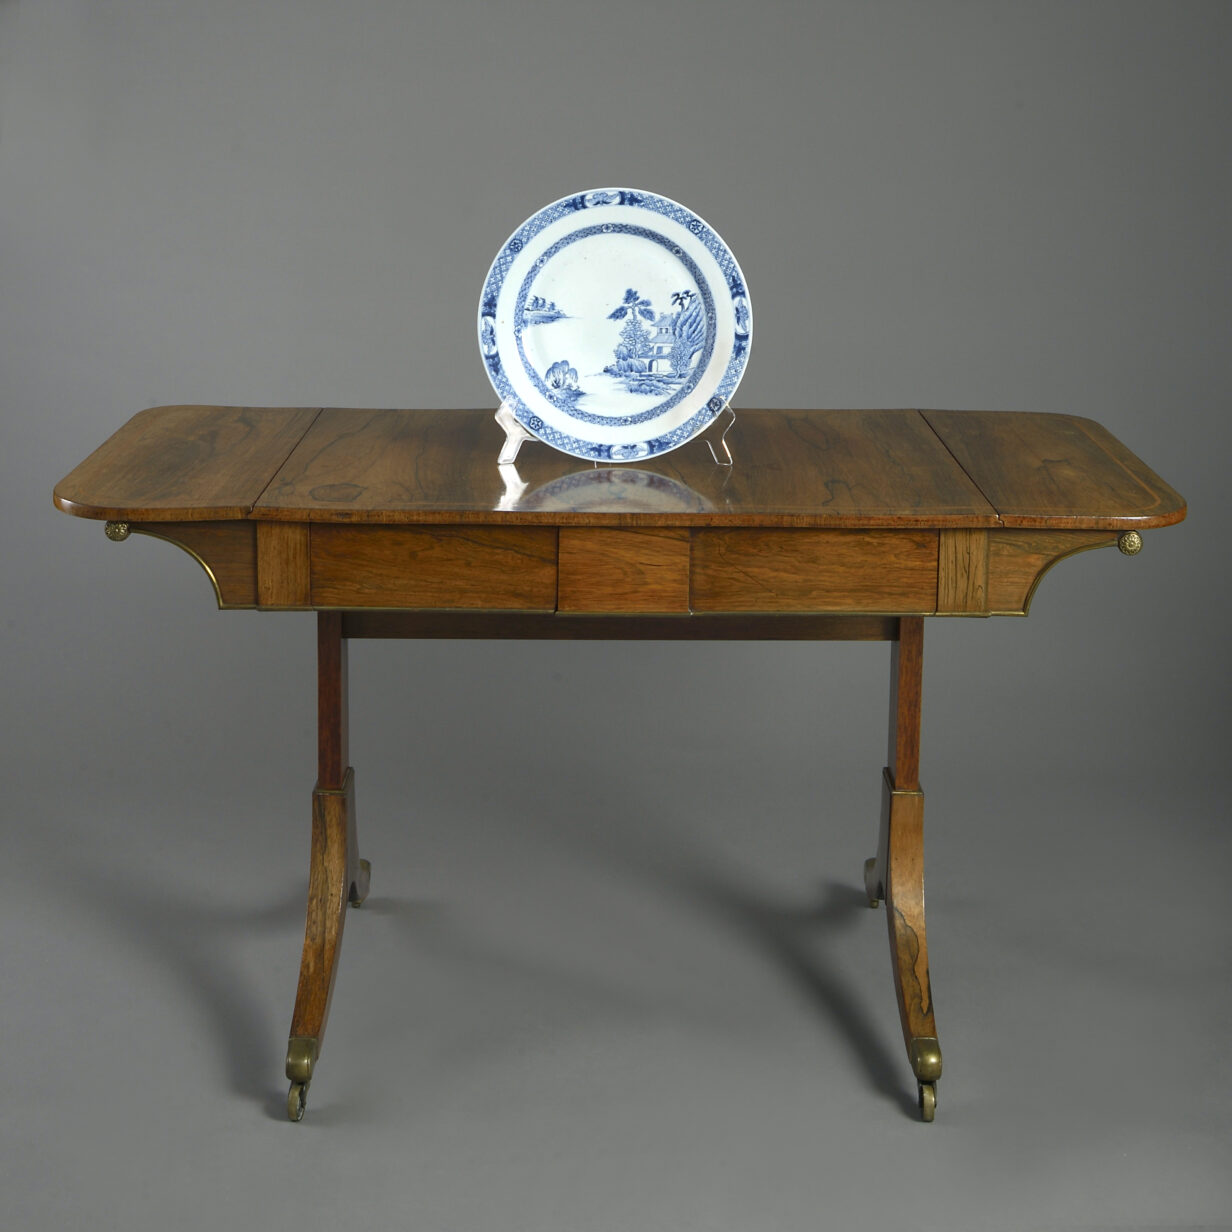 Late 18th century george iii period rosewood sofa table